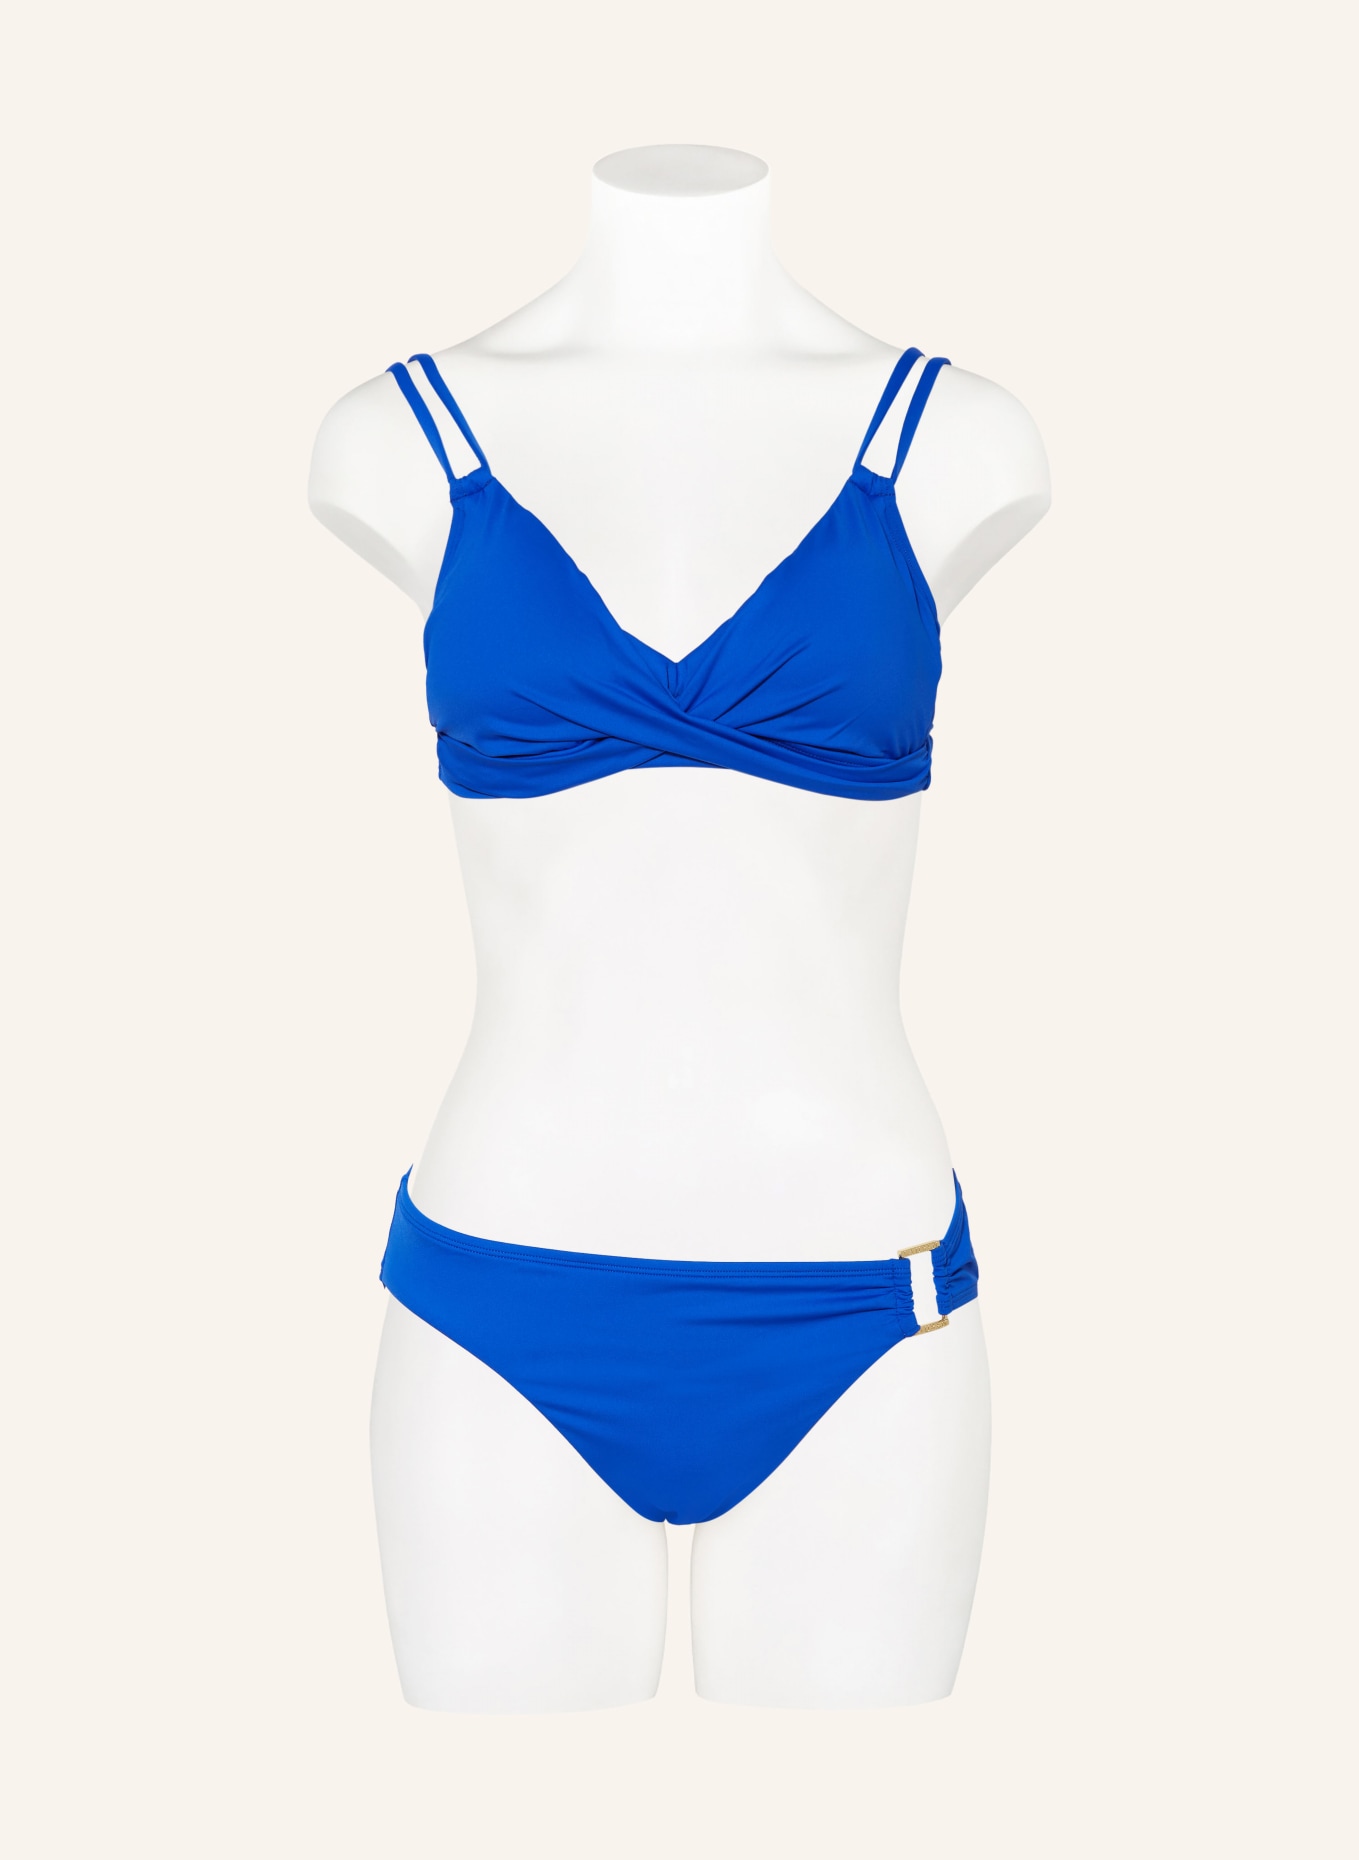 LAUREN RALPH LAUREN Bralette bikini top BEACH CLUB SOLIDS in blue